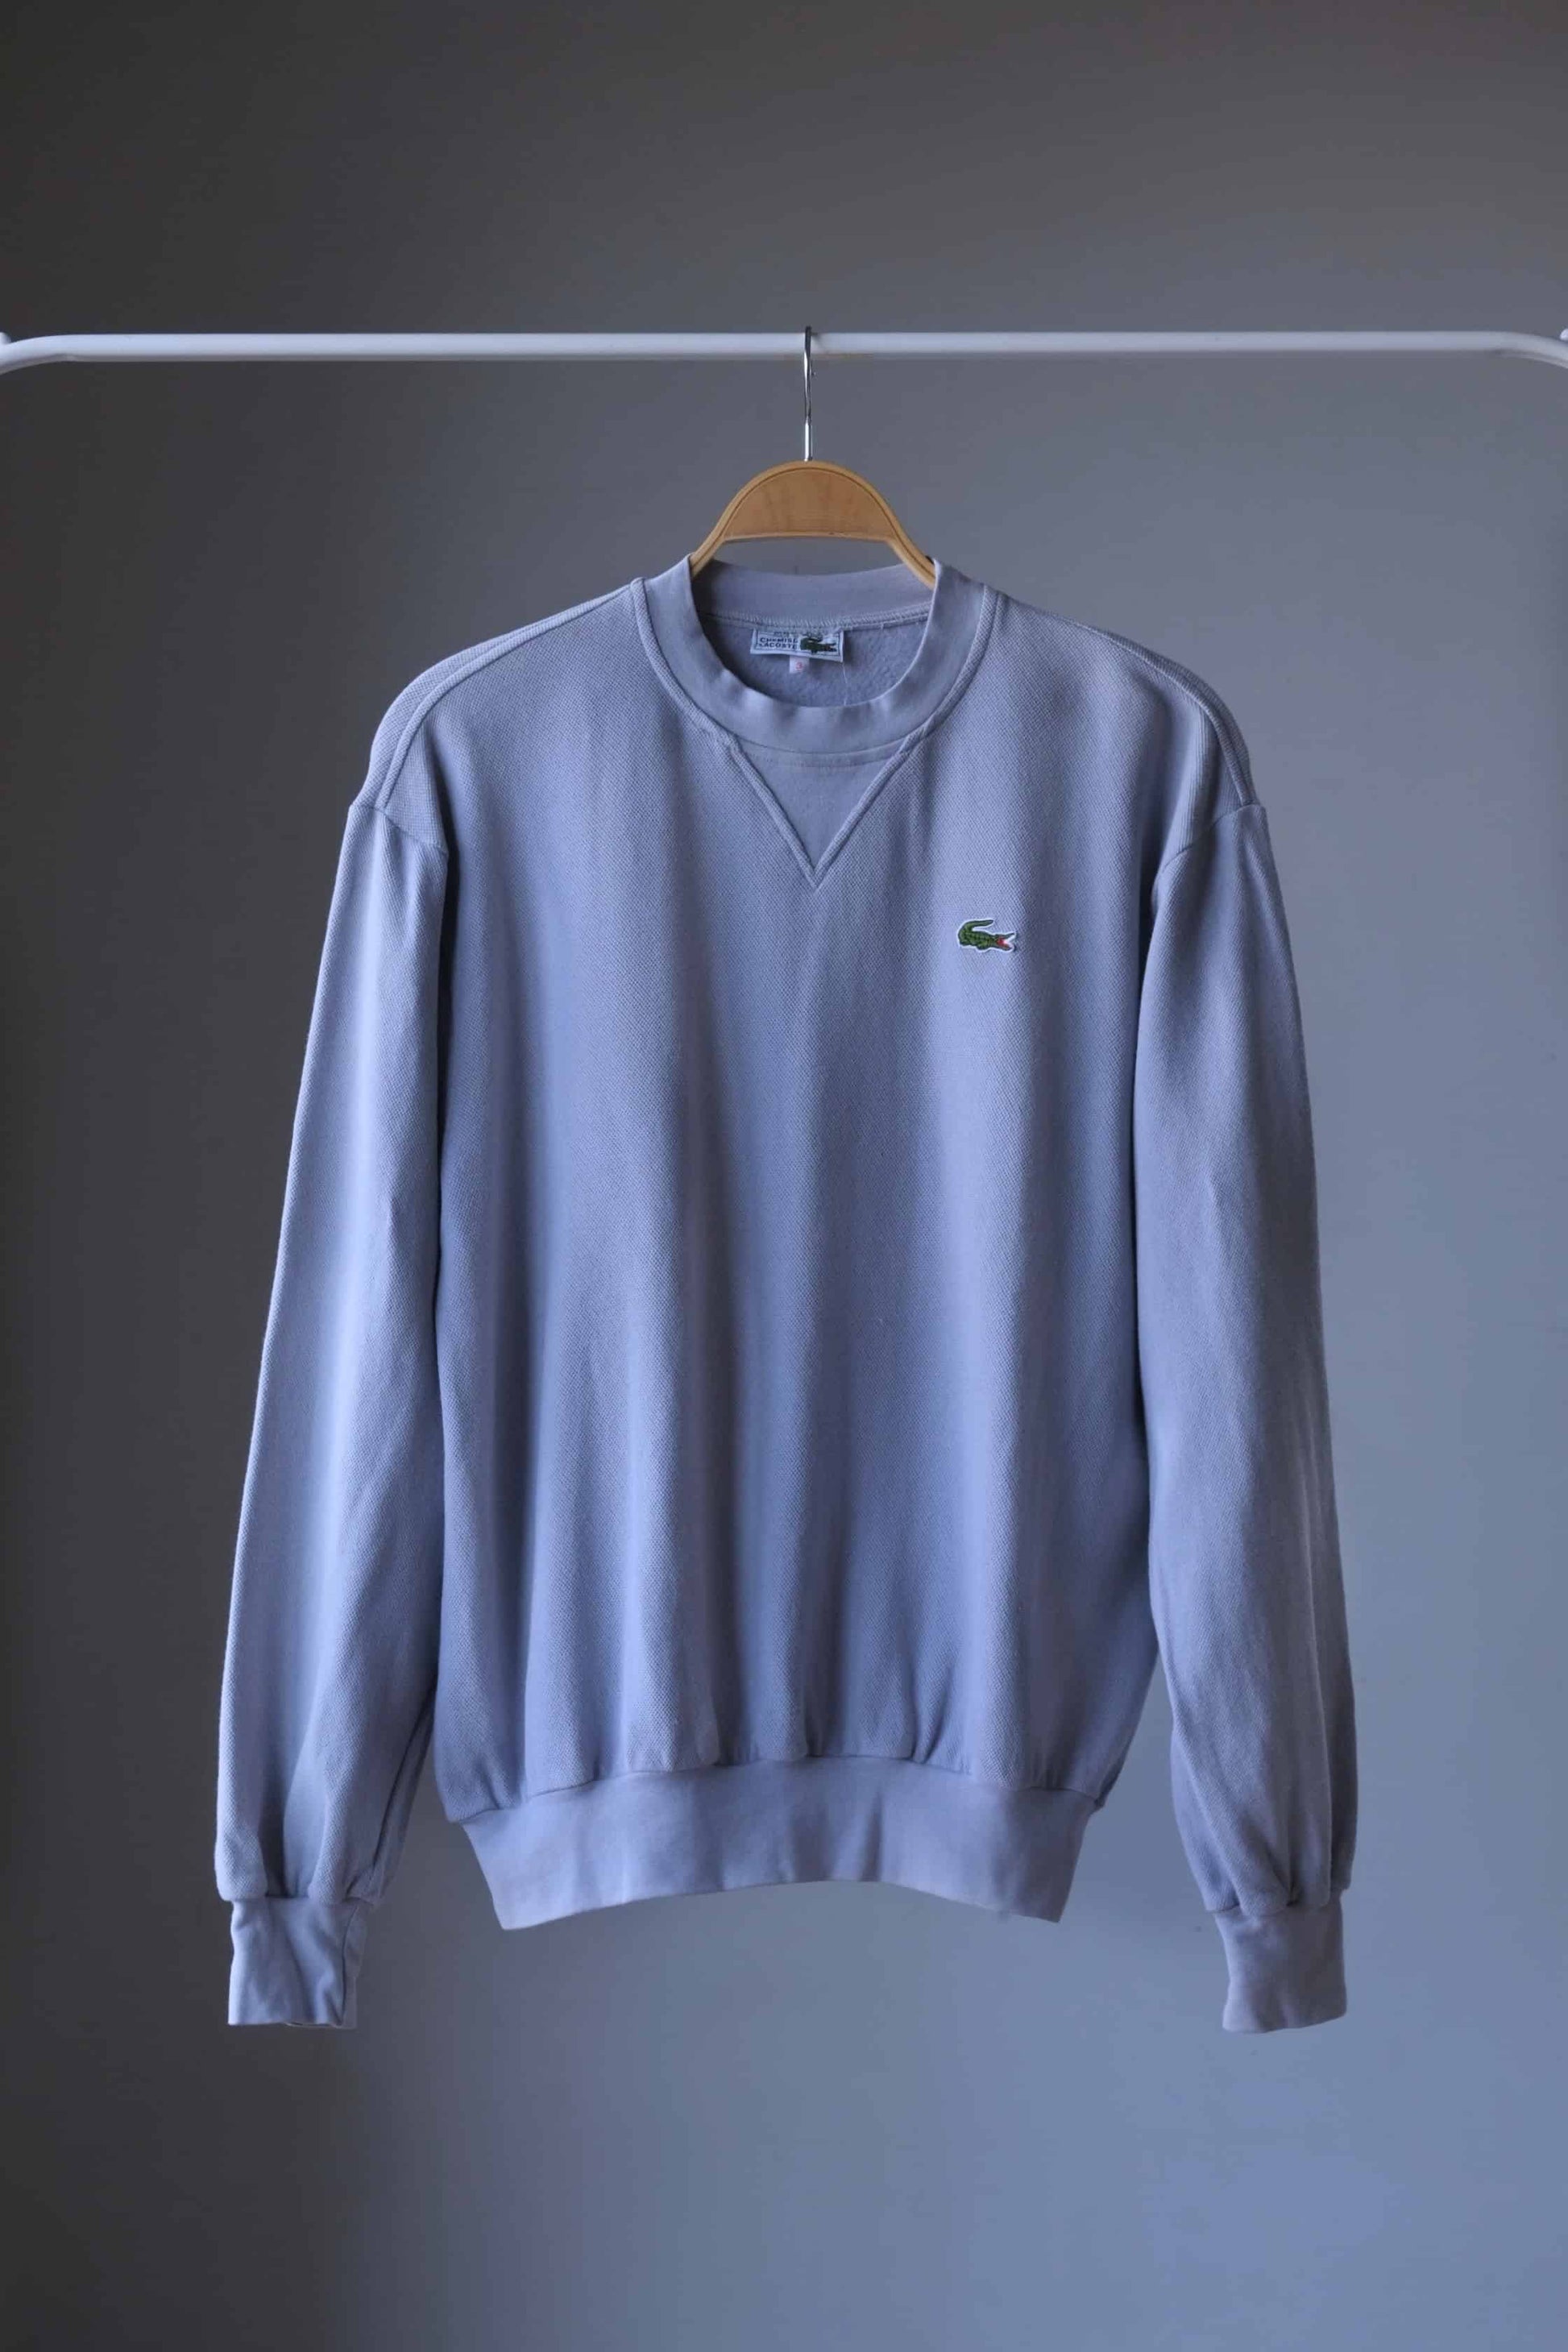 Gray Lacoste 90s sweatshirt on hanger